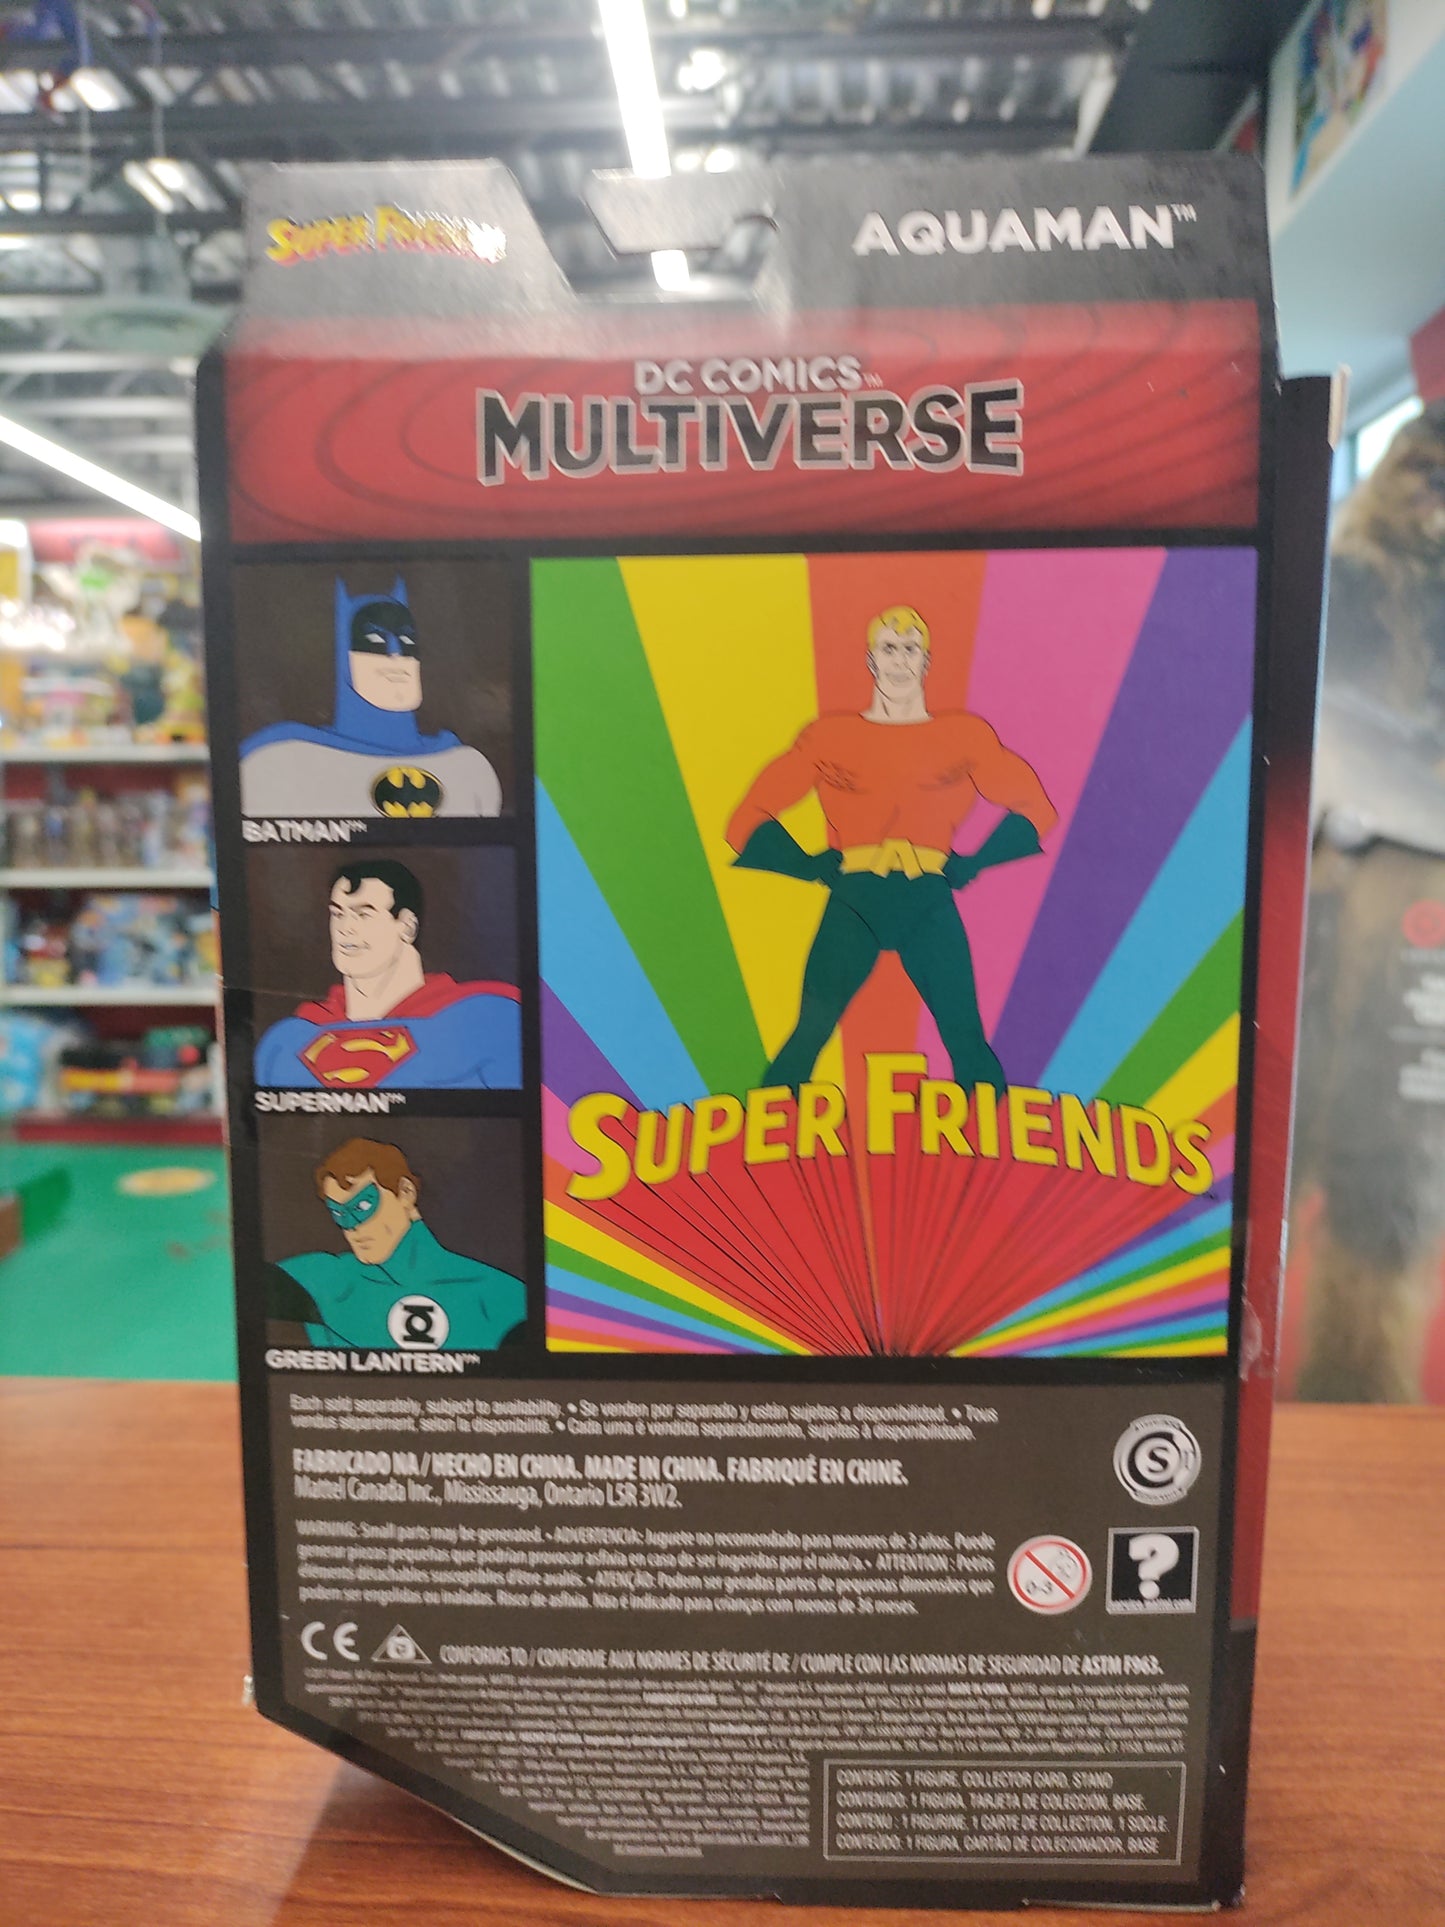 DC Multiverse Super Friends Aquaman